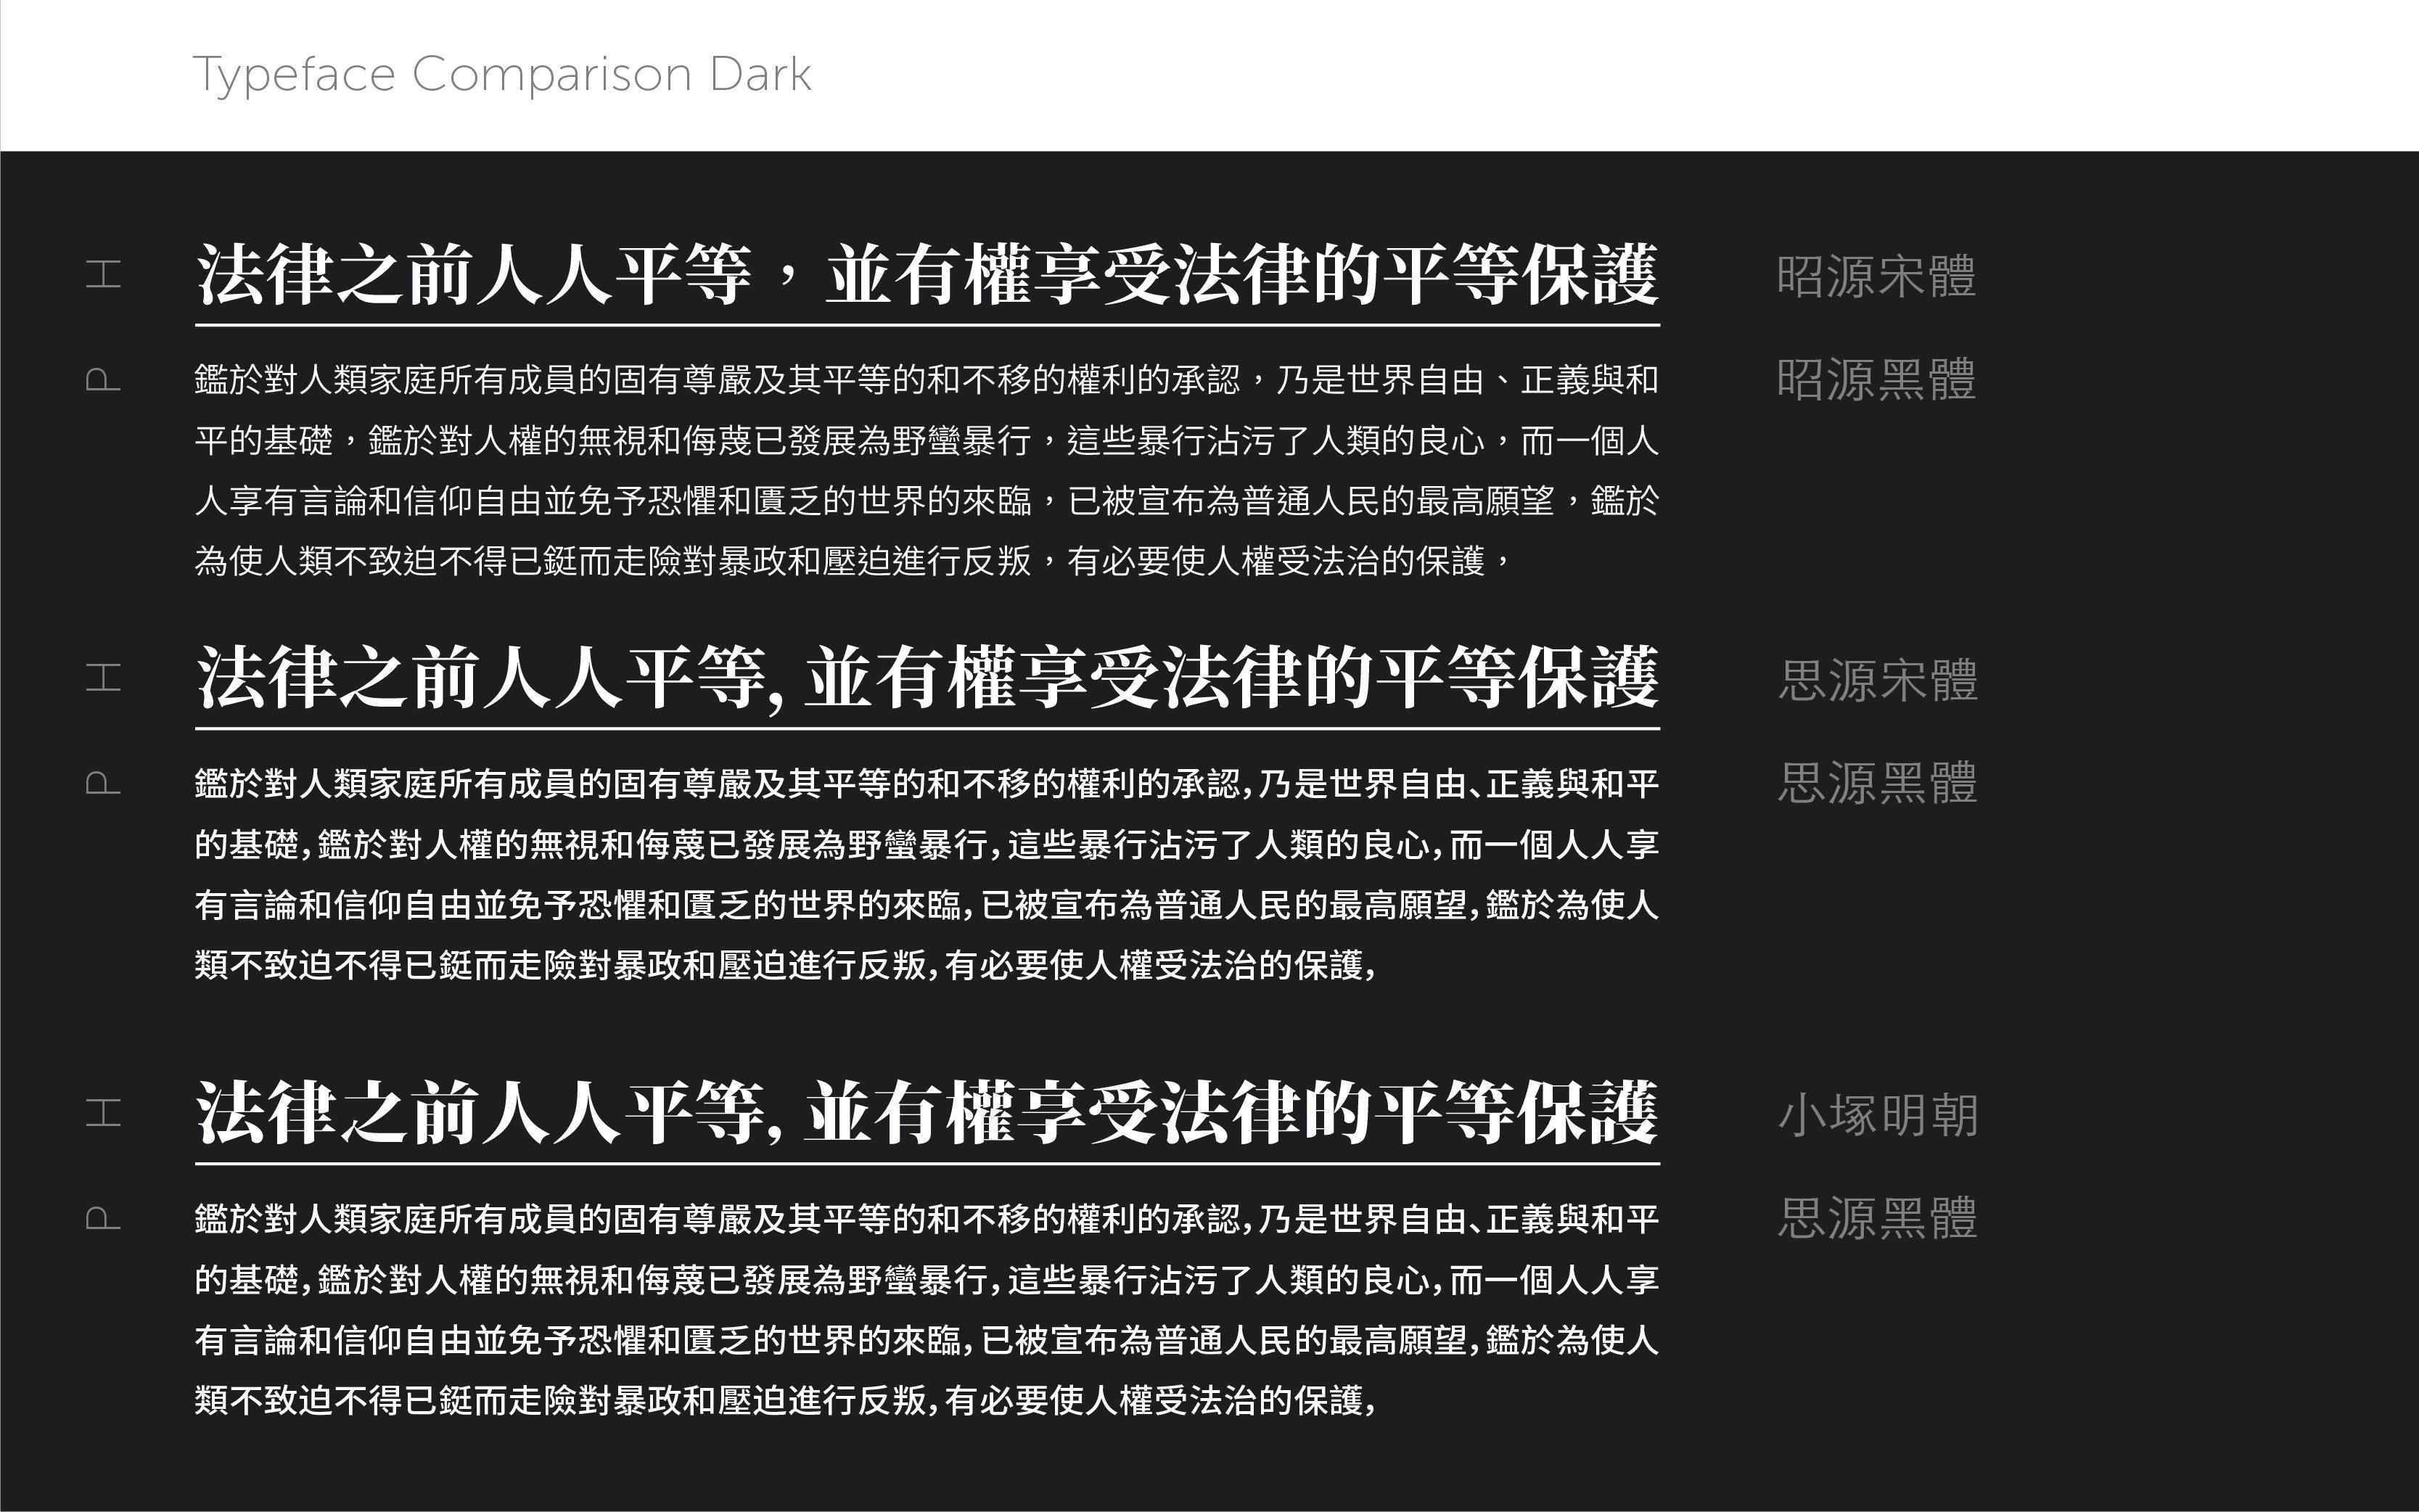 JYC - Typeface Comparison - TC - Dark